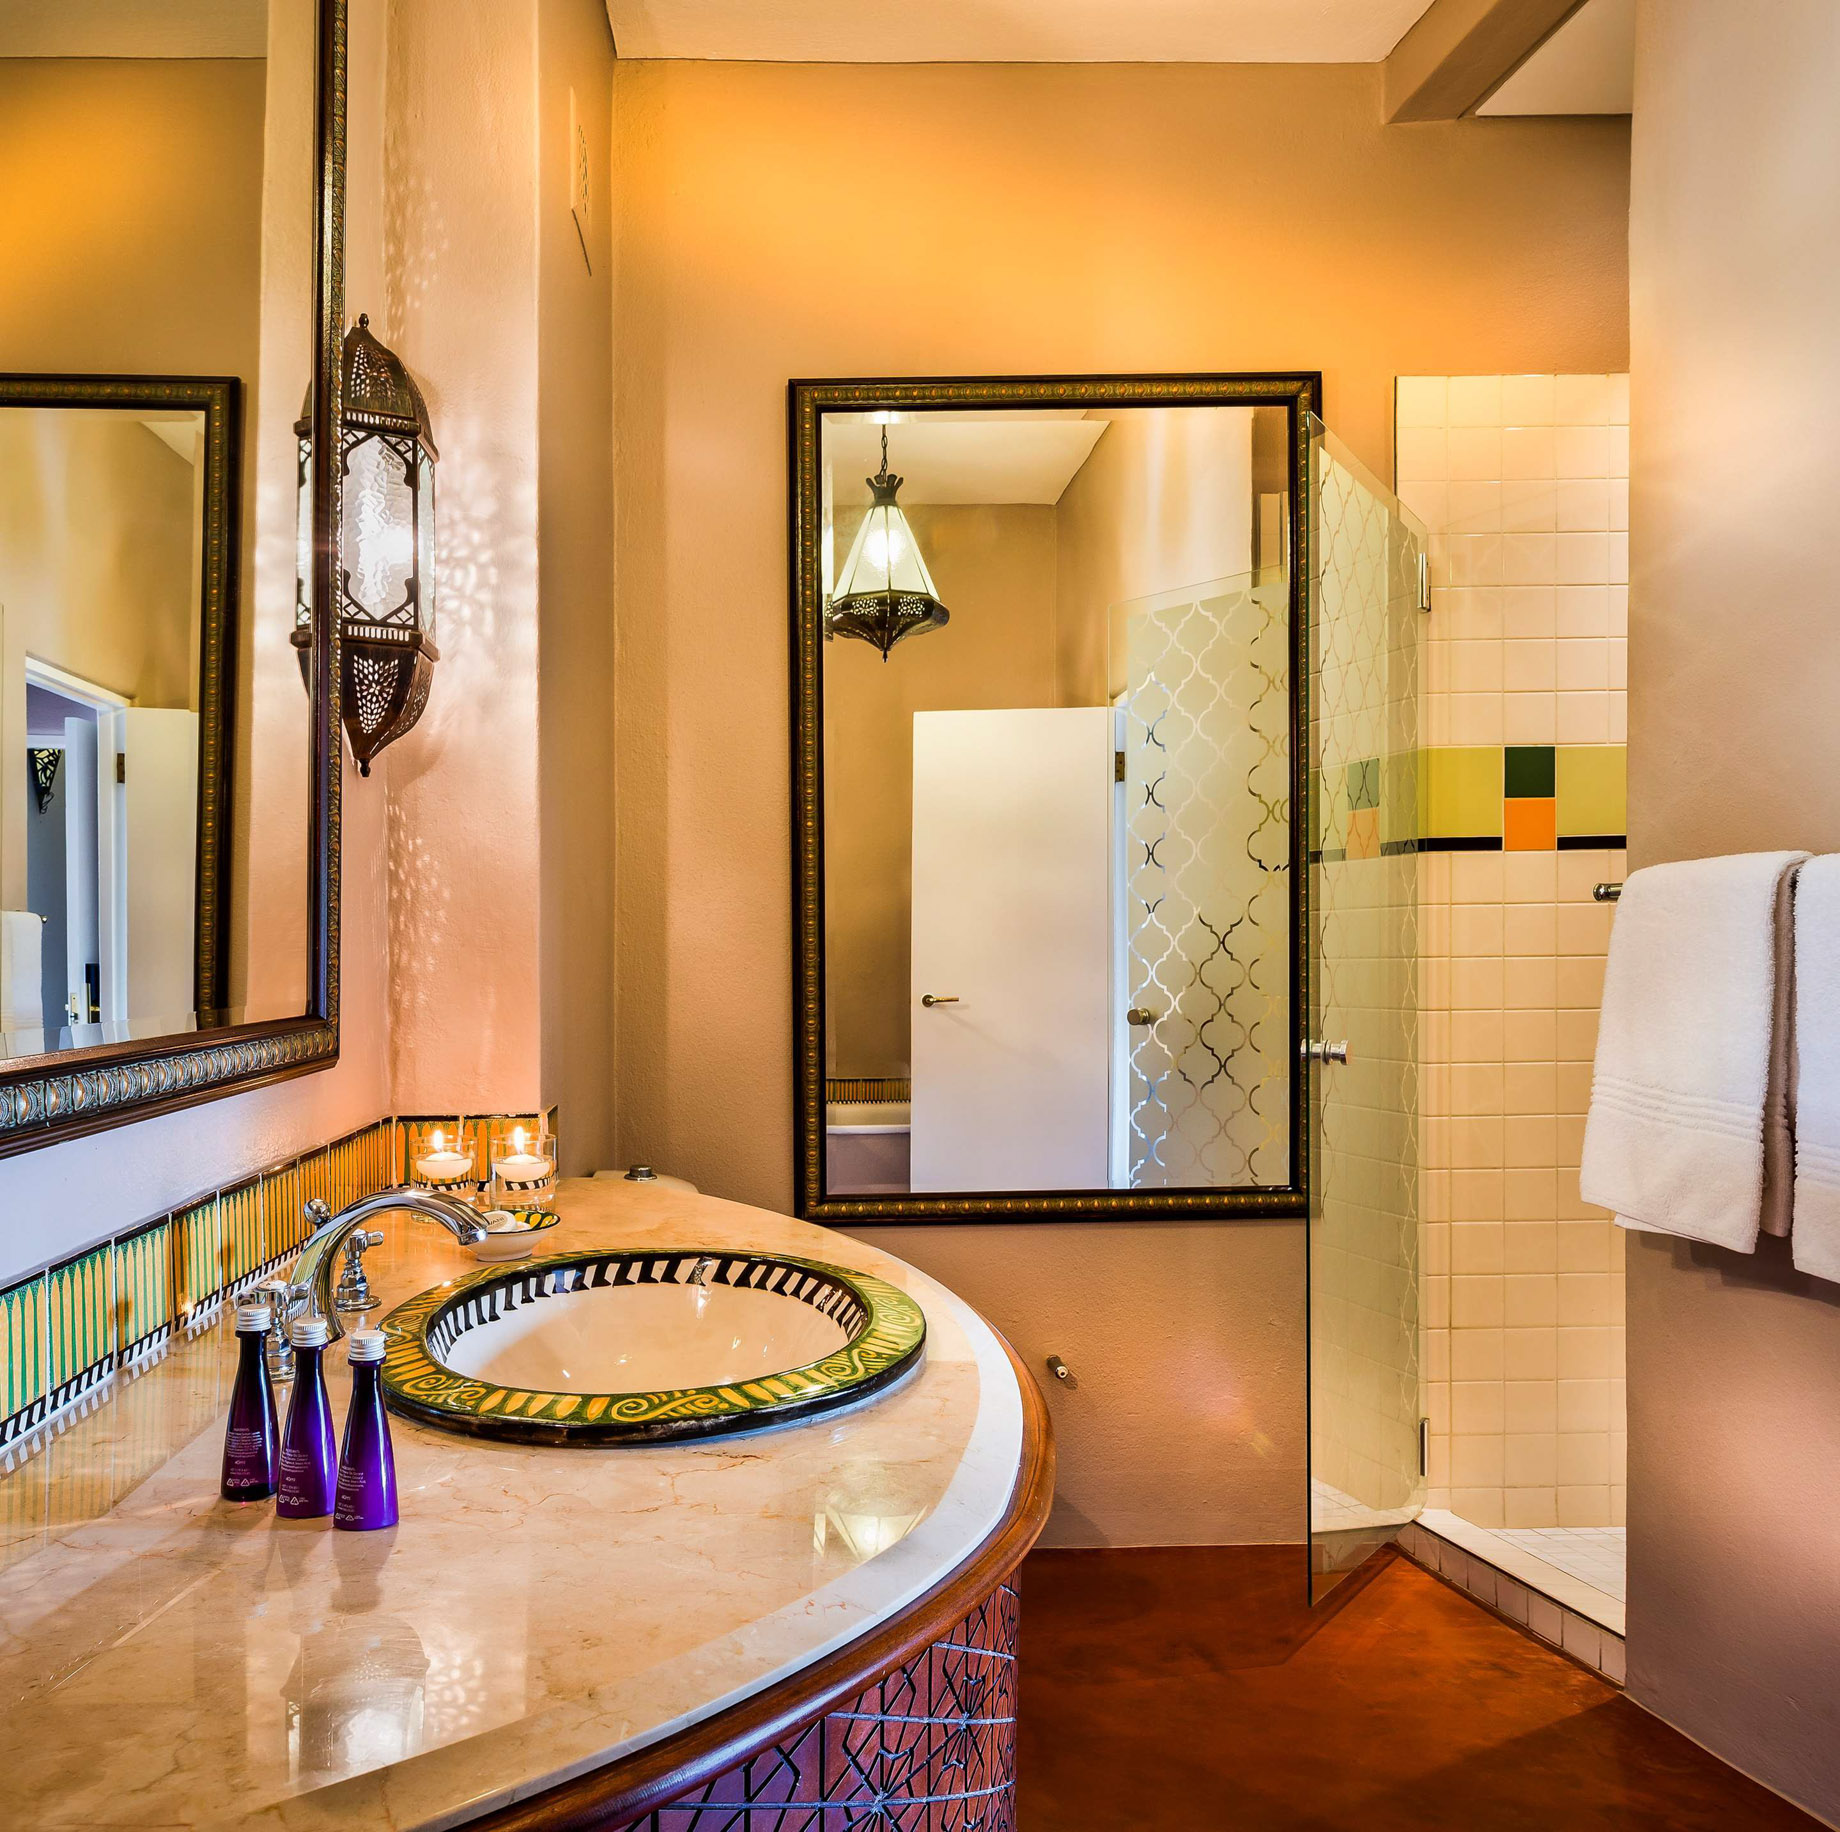 Avani Victoria Falls Resort – Livingstone, Zambia – Bathroom